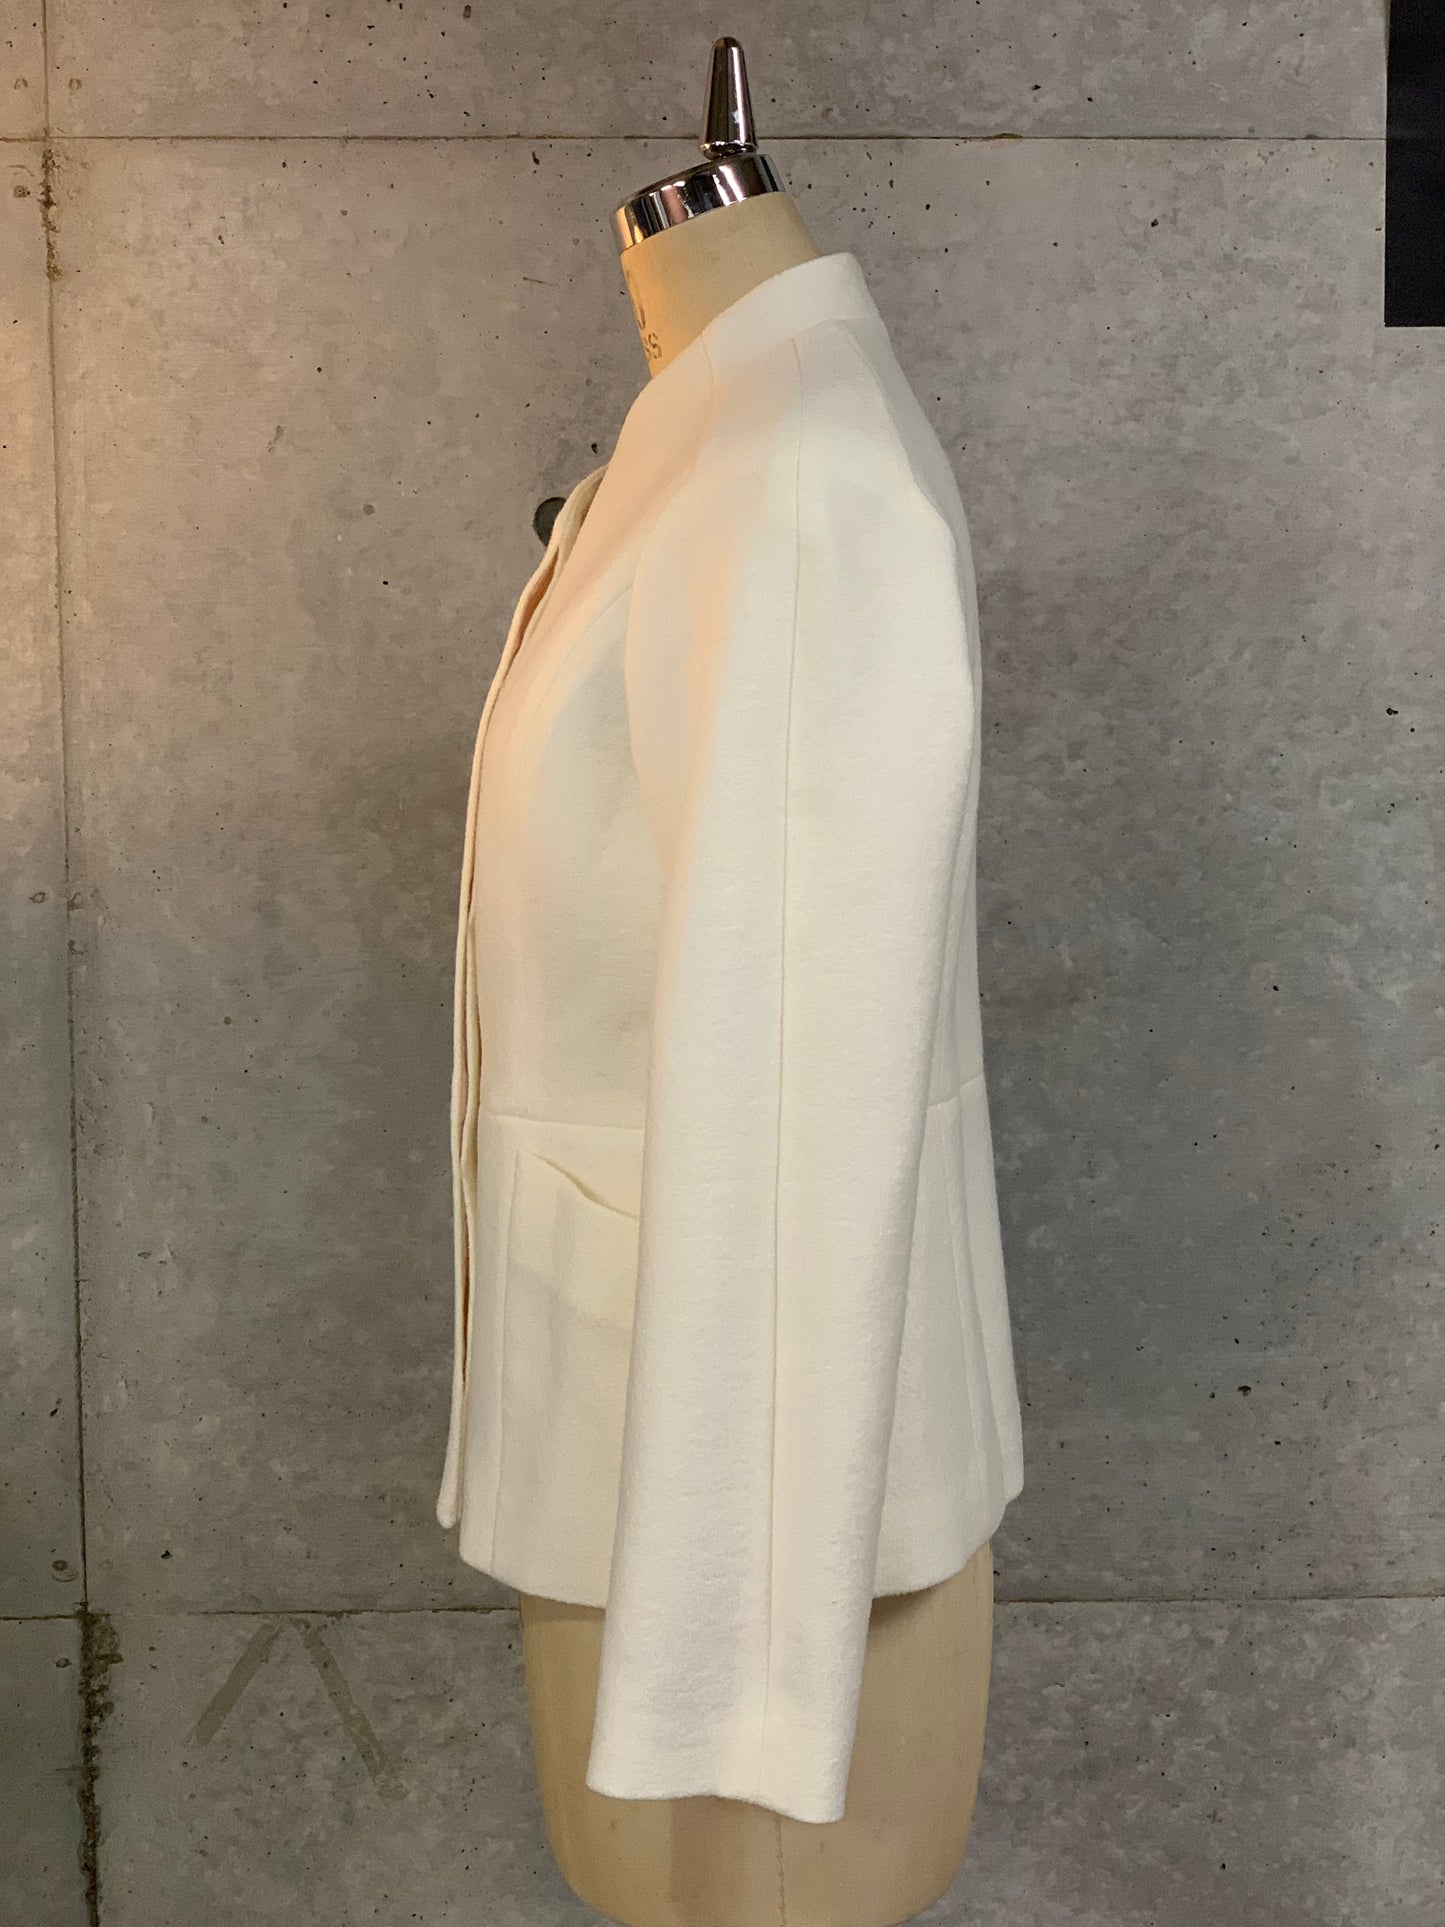 Peplum Jacket in White Wool